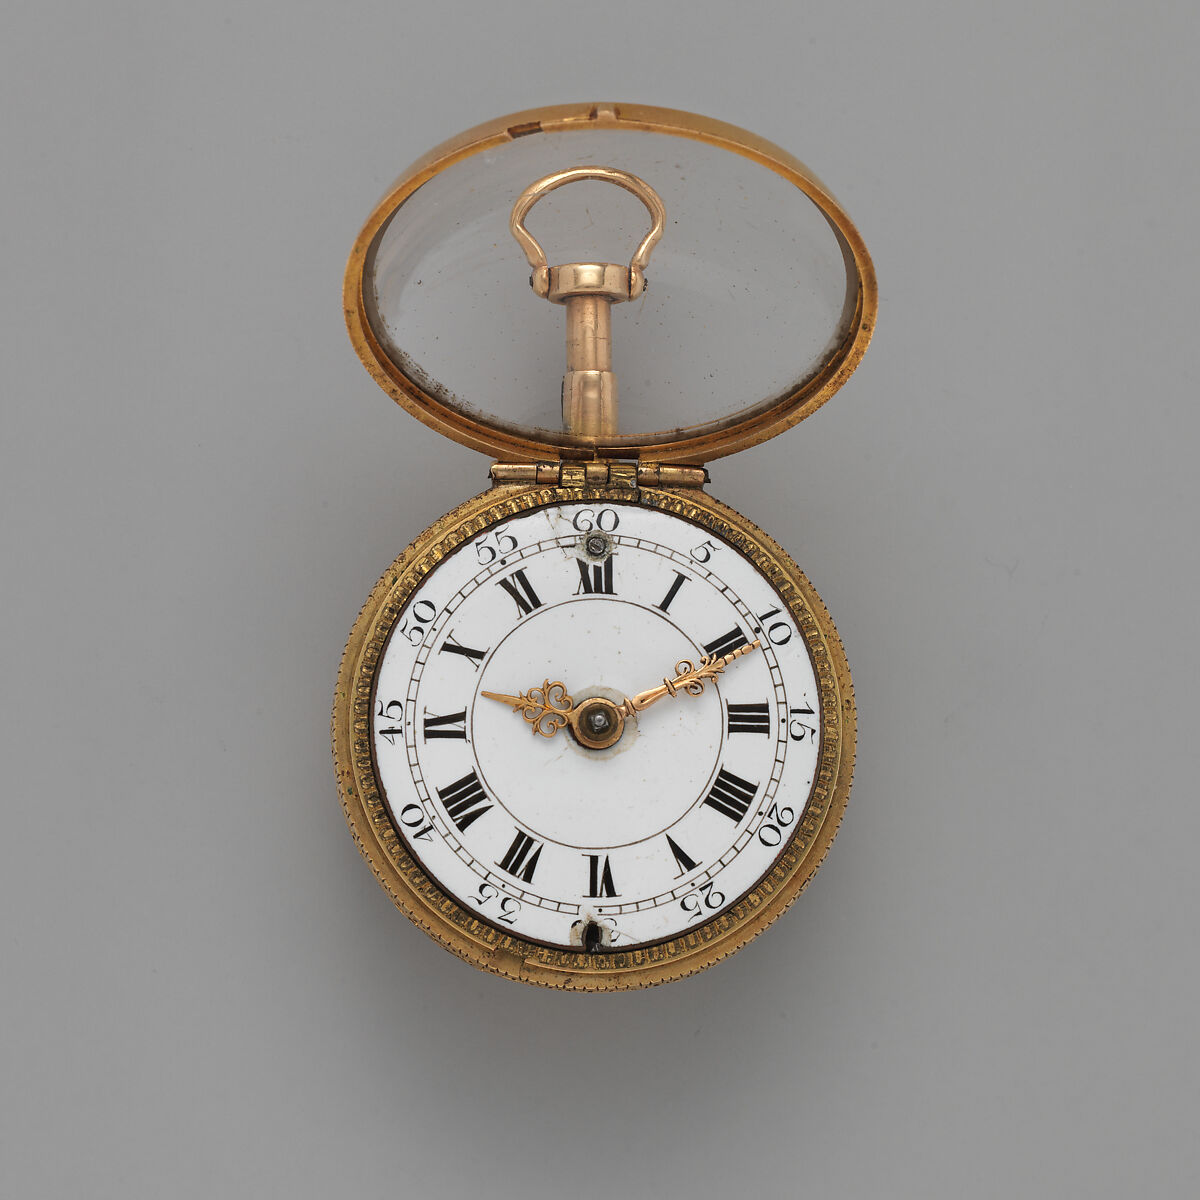 Repeating watch and case, Watchmaker: Christopher Heinrich Haehnel (active London, 1695–1754), Gold, enamel or vernis Martin, German, Fürton 